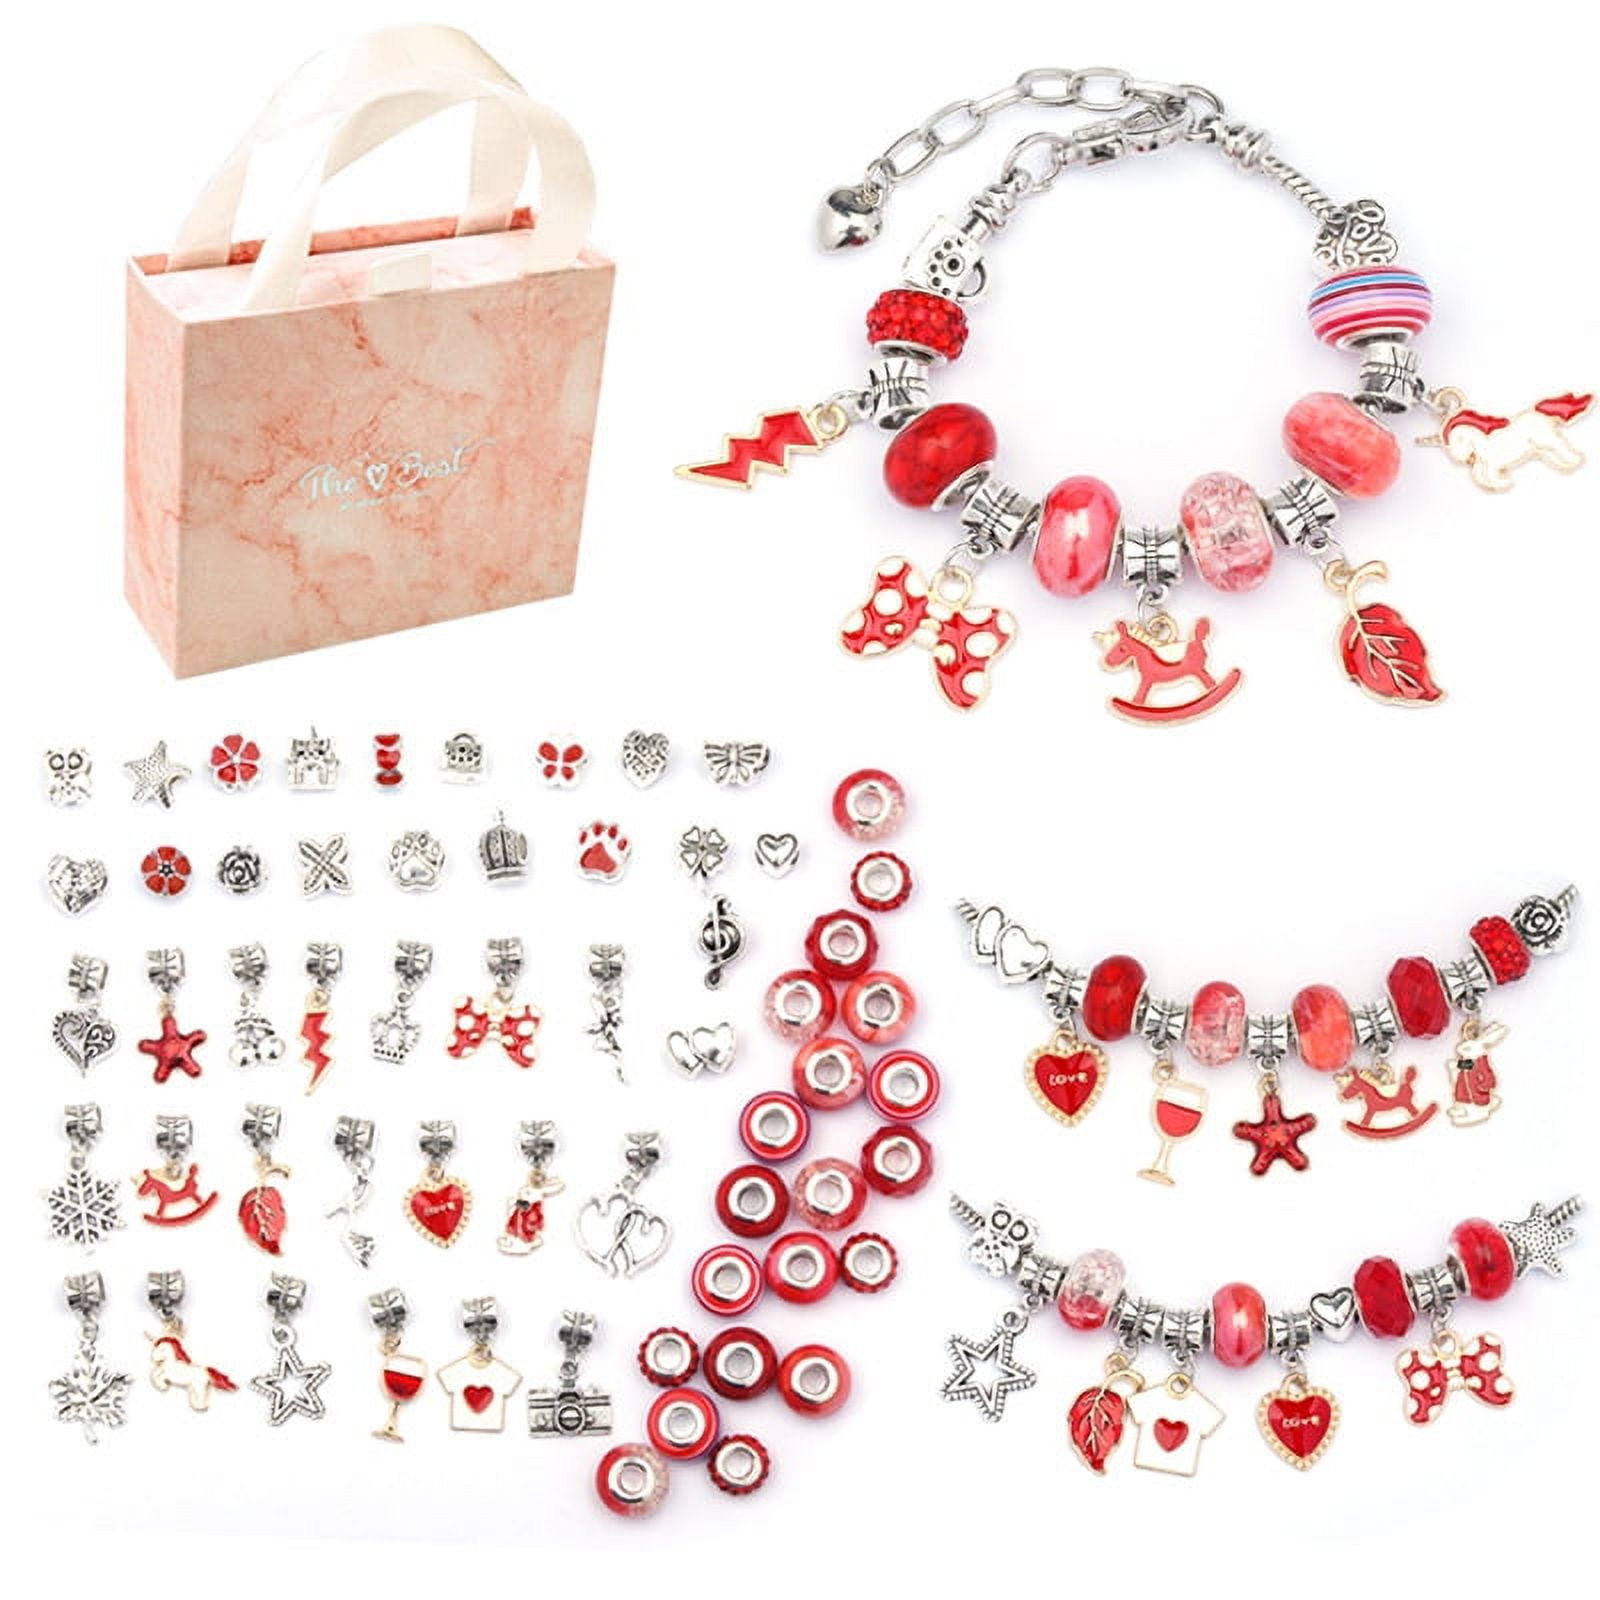 HONSITML DIY Crystal Bracelet Set, Charm Bracelet Making Kit, Teen Girl Gifts Jewelry Making Kit, Unicorn/Mermaid Girl Toys Art Supplies Crafts for Birthday